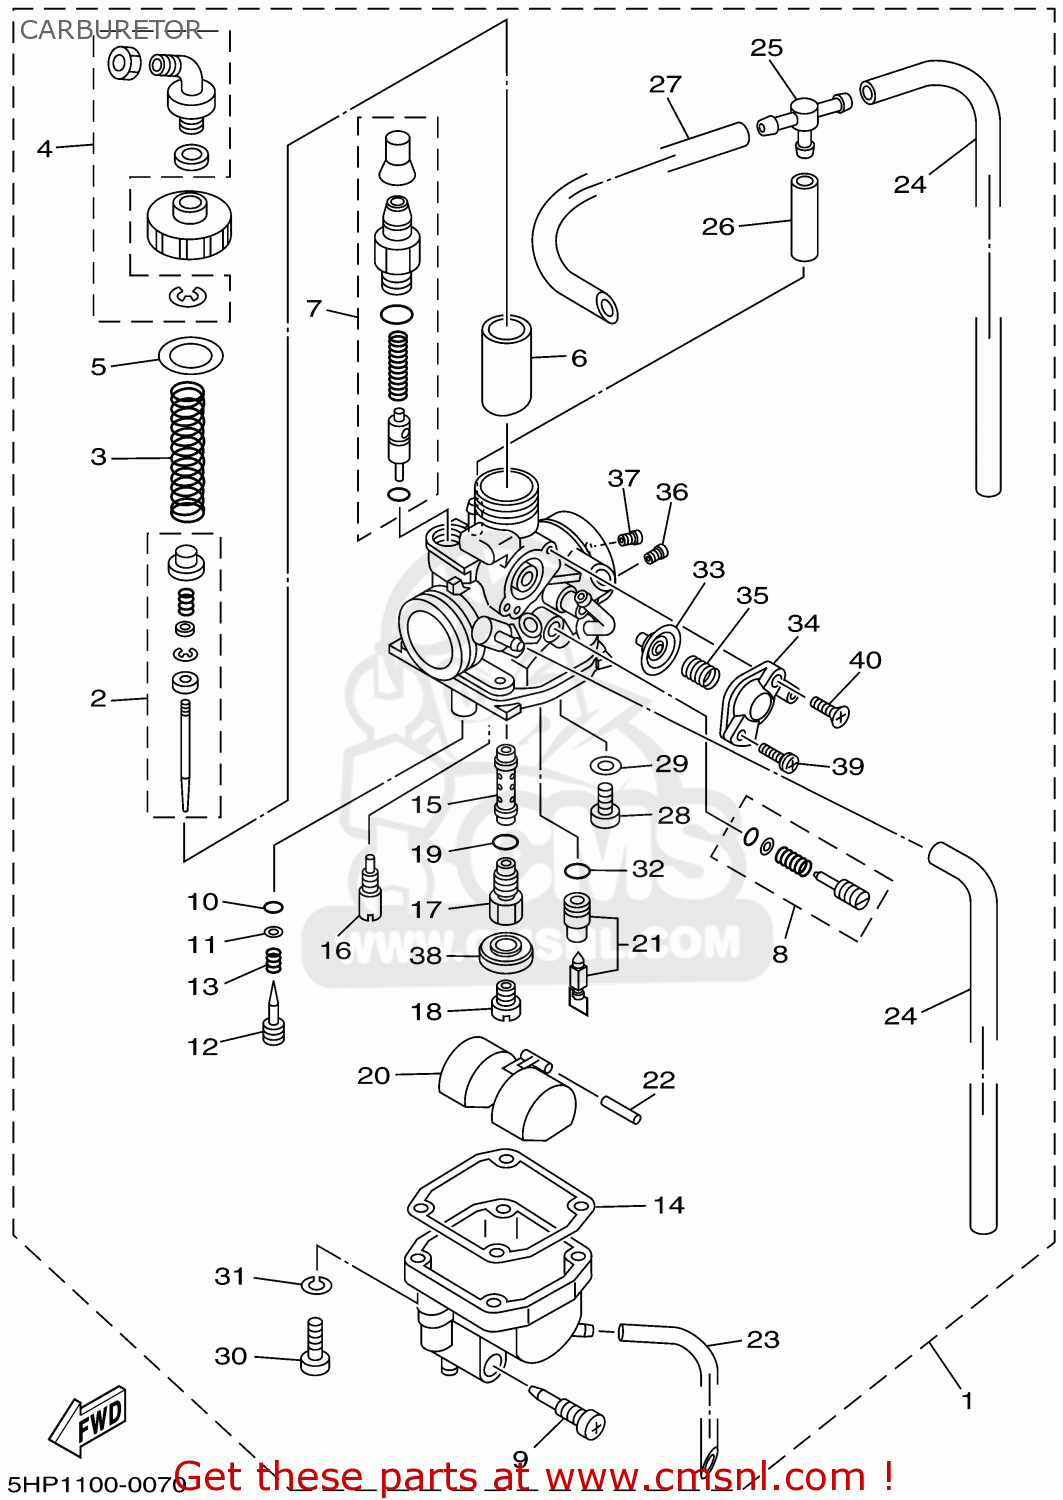 yamaha ttr 225 wiring diagram